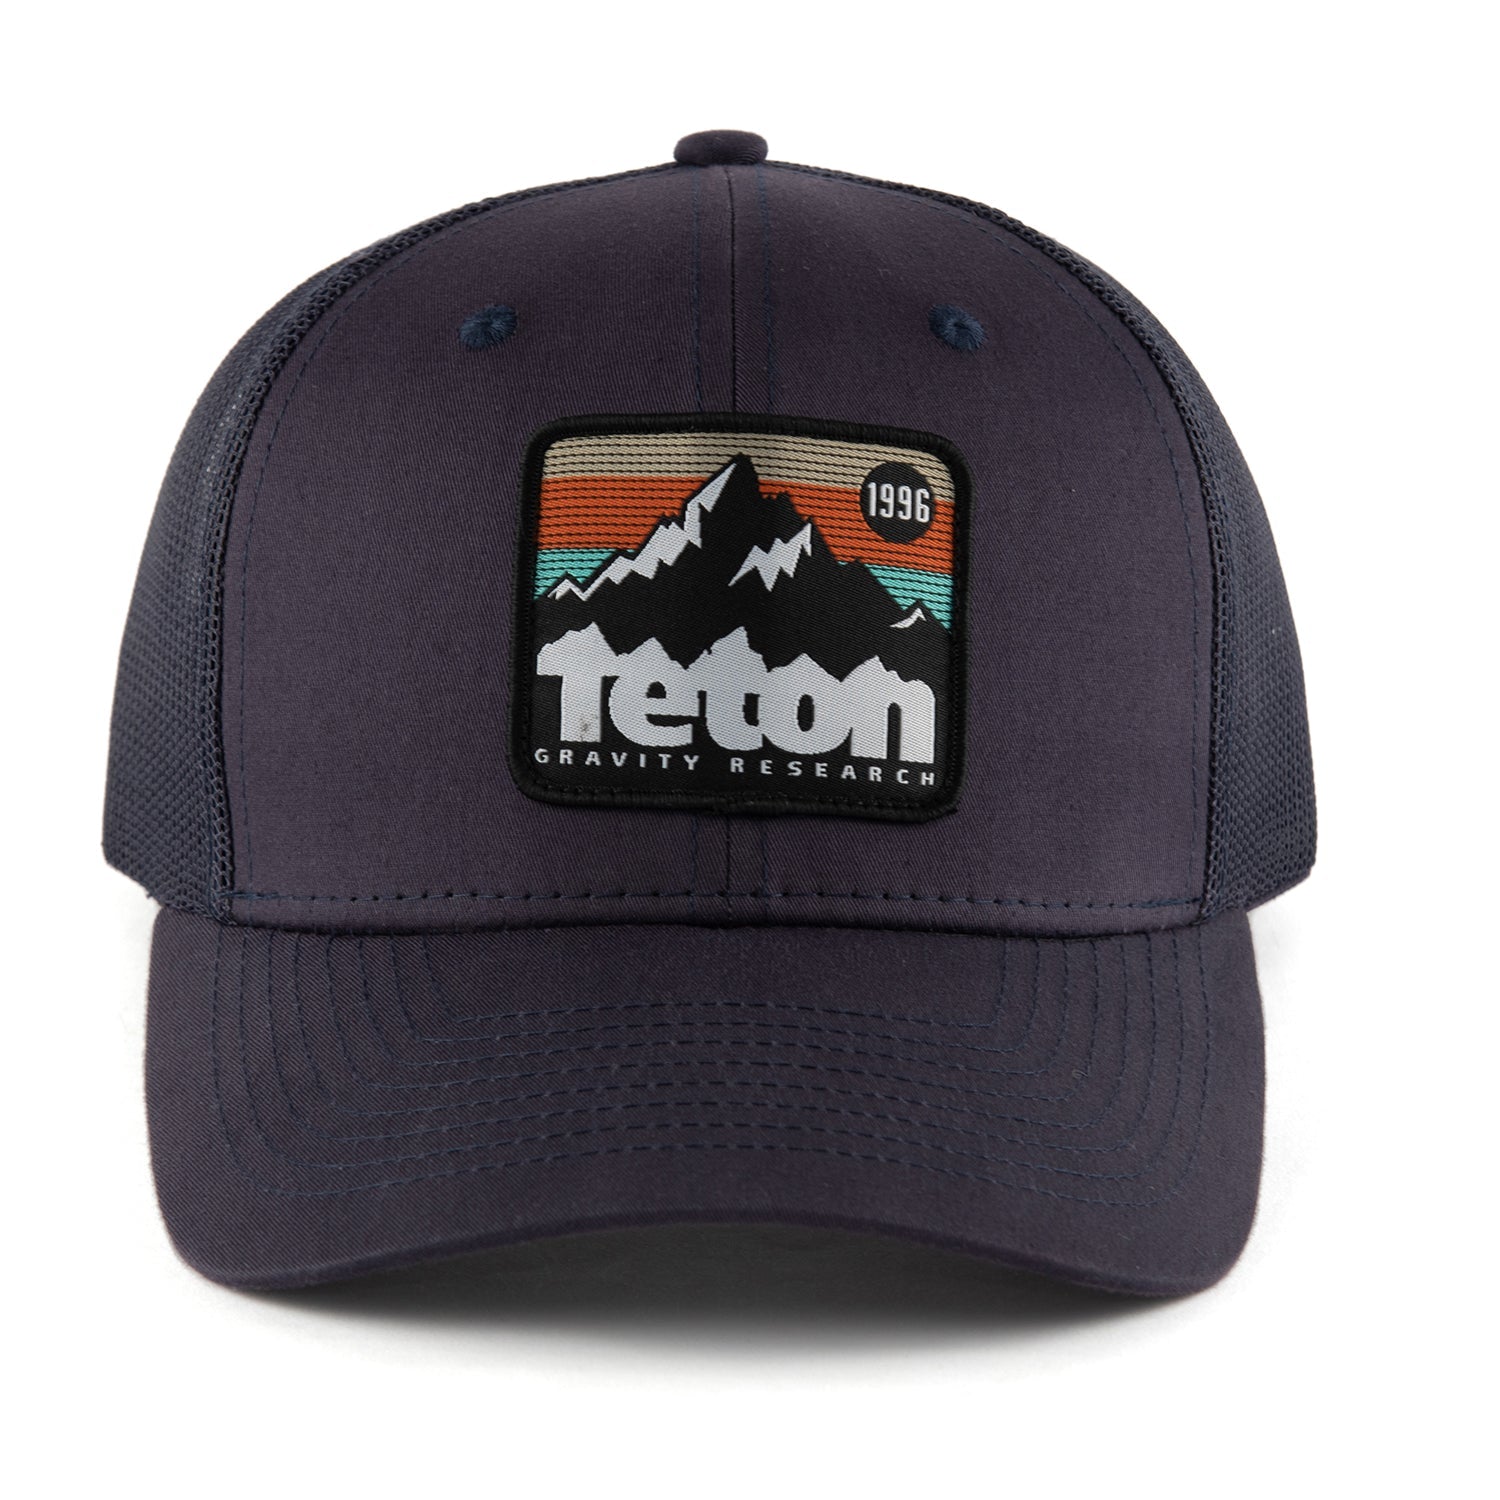 Youth '96 Badge Hat - Teton Gravity Research